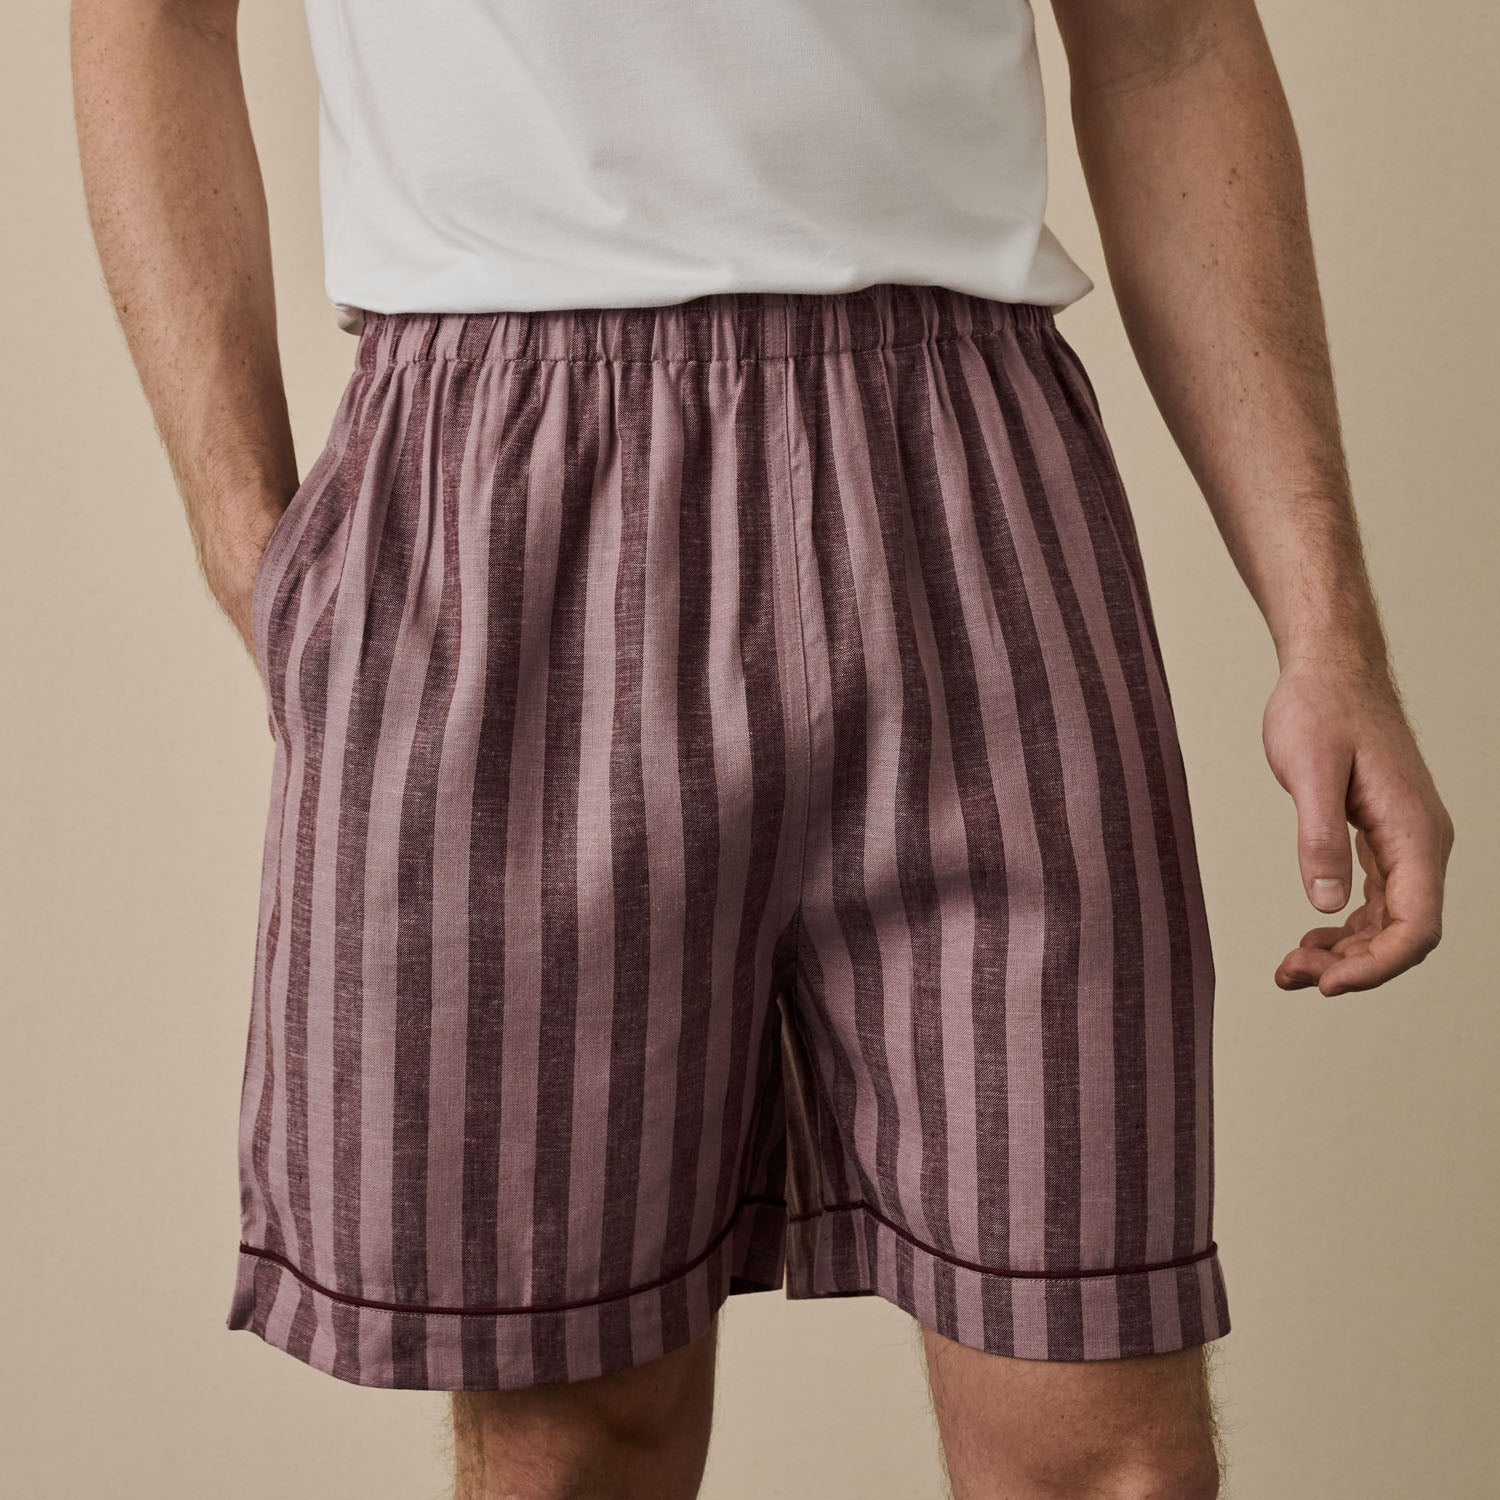 Port & Woodrose Striped Linen Men's PJ Shorts